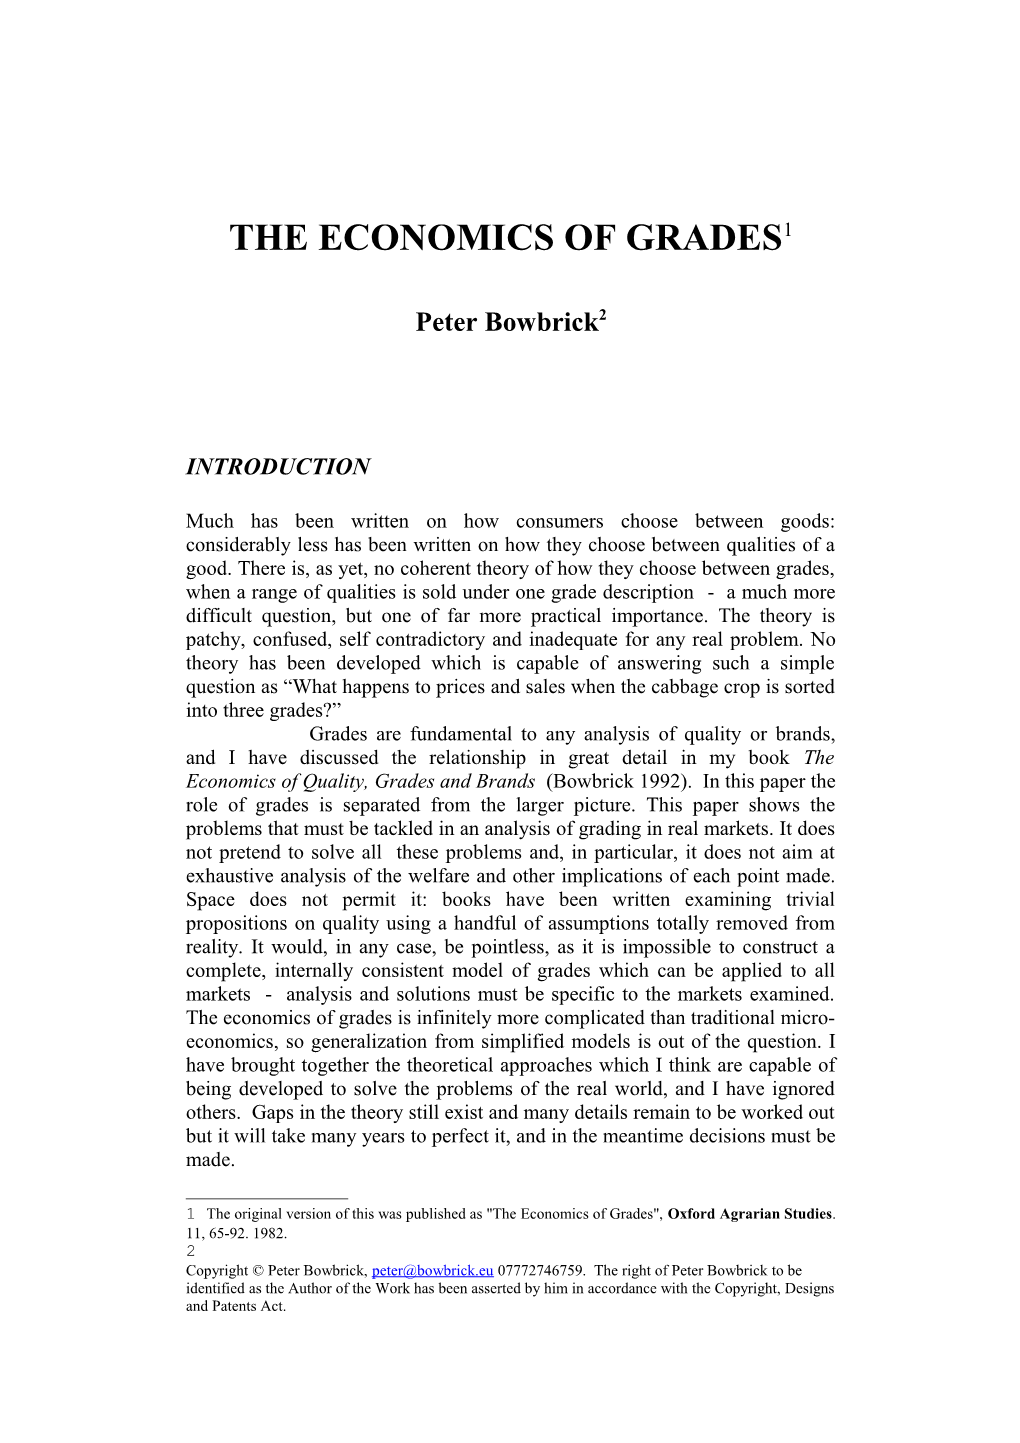 The Economics of Grades